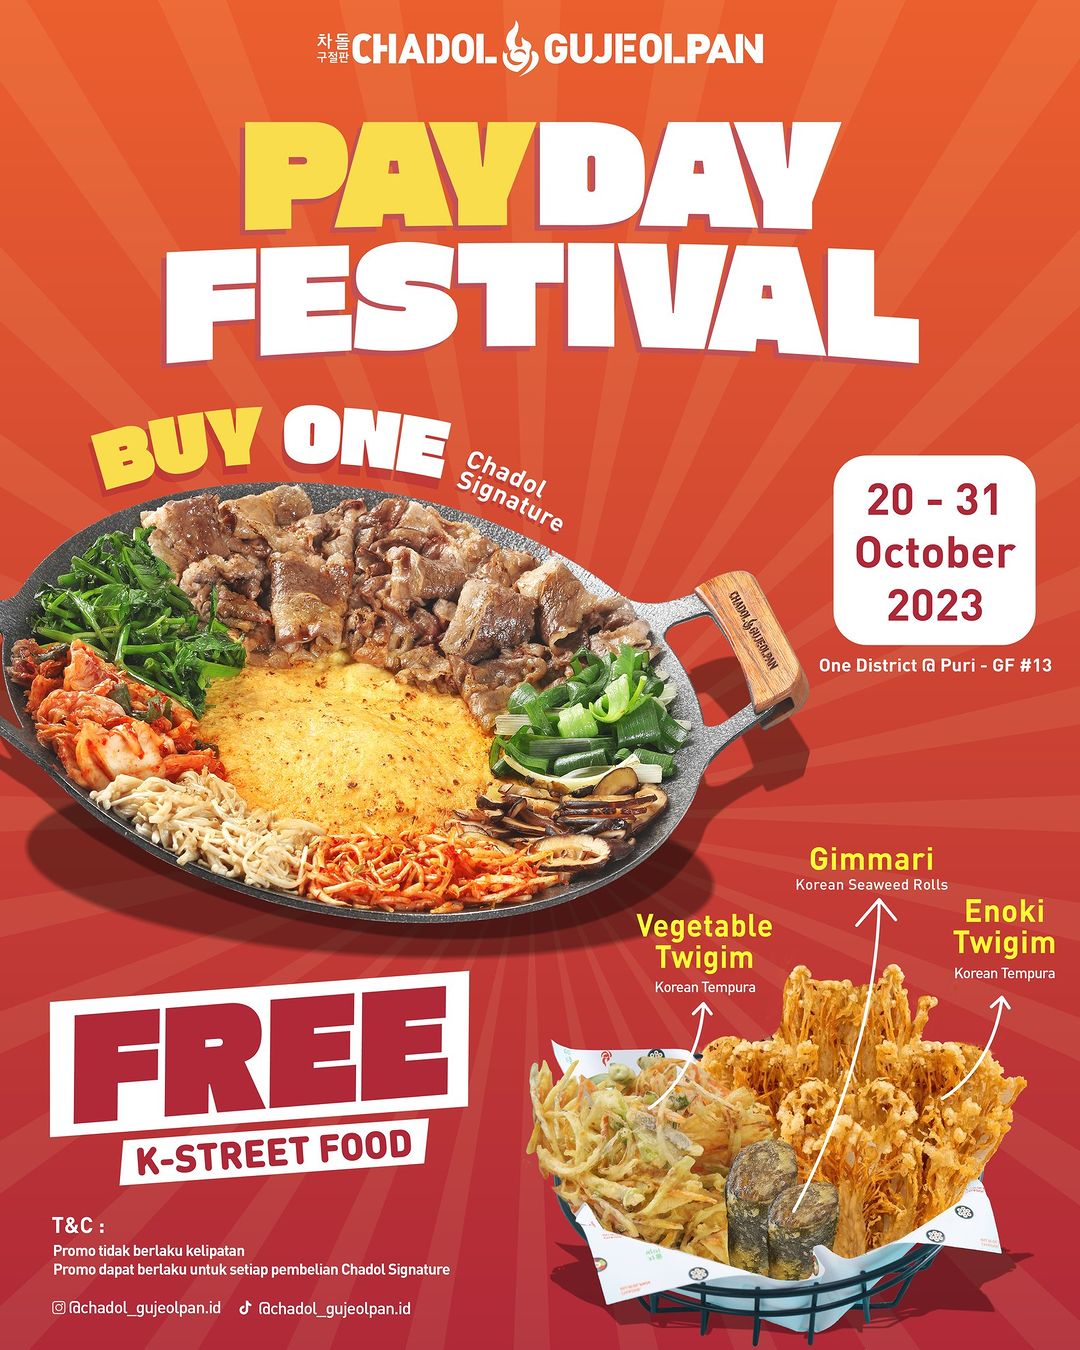 Promo K-Street Food Payday Festival Beli 1 Gratis 1